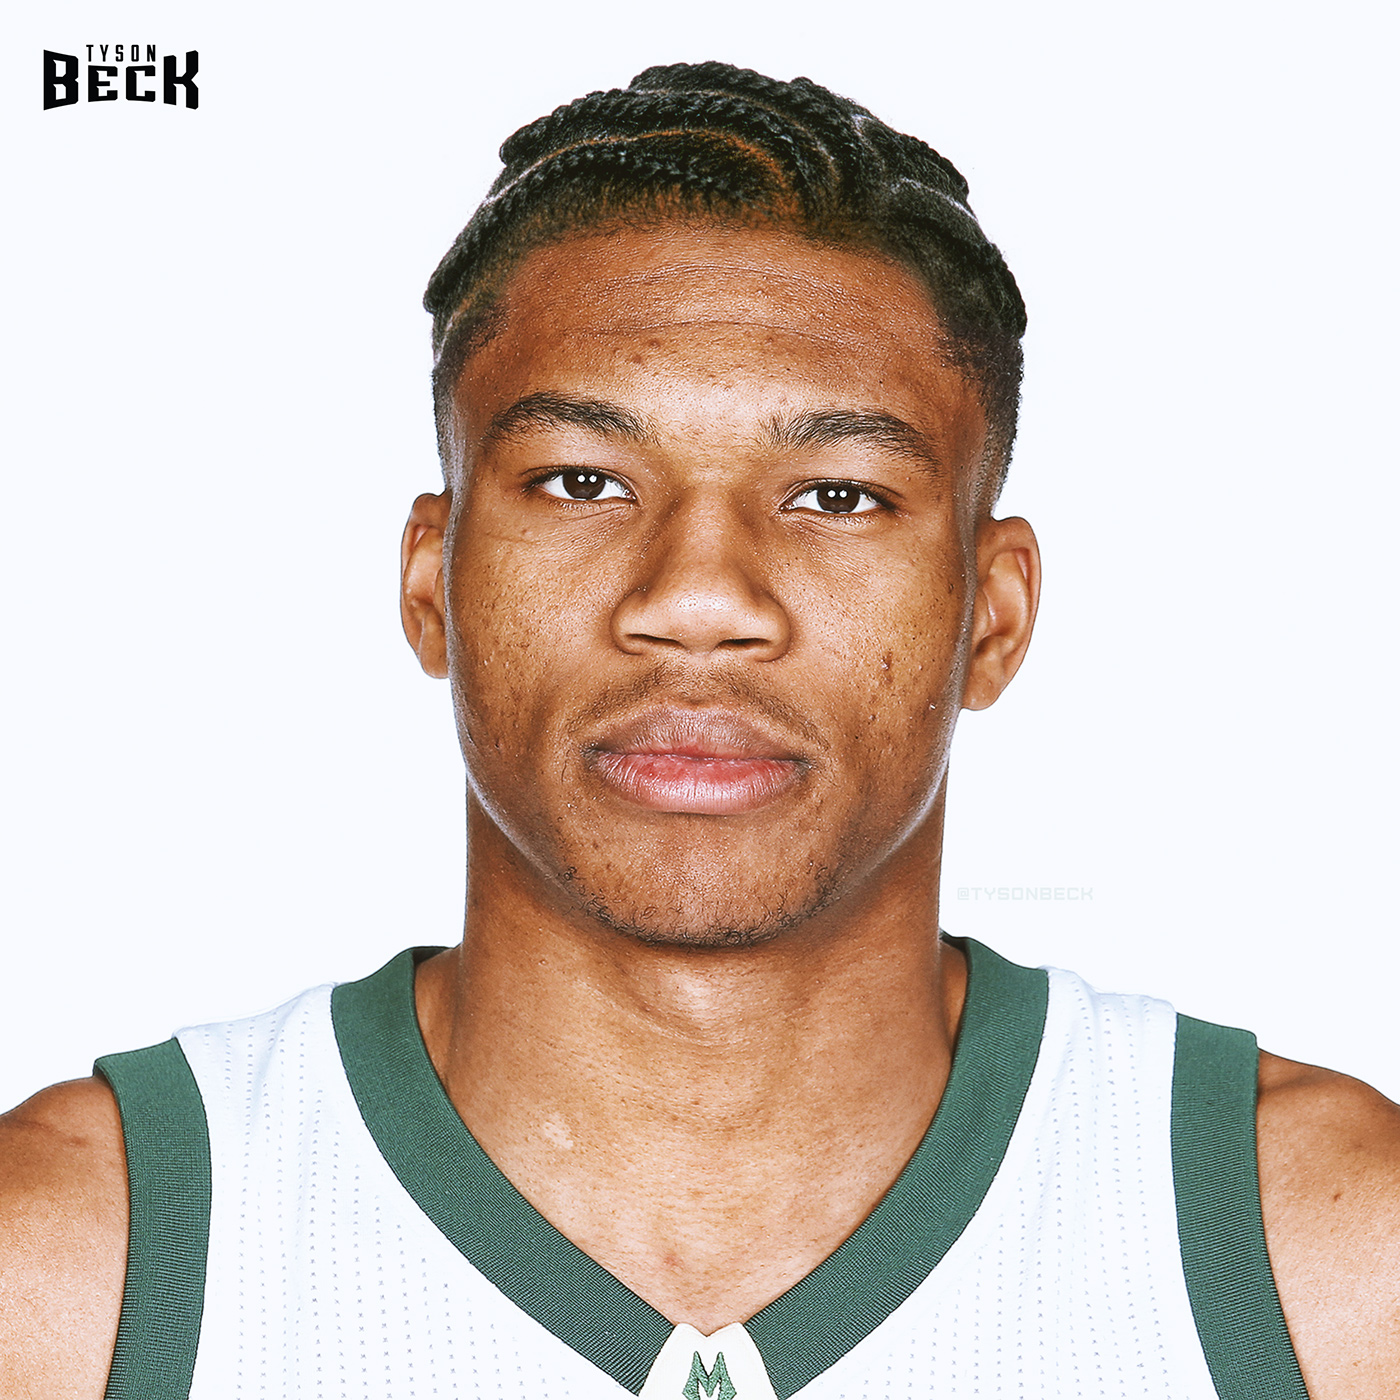 NBA LeBron steph curry Westbrook Durant hair sport manipulation retouch photoshop